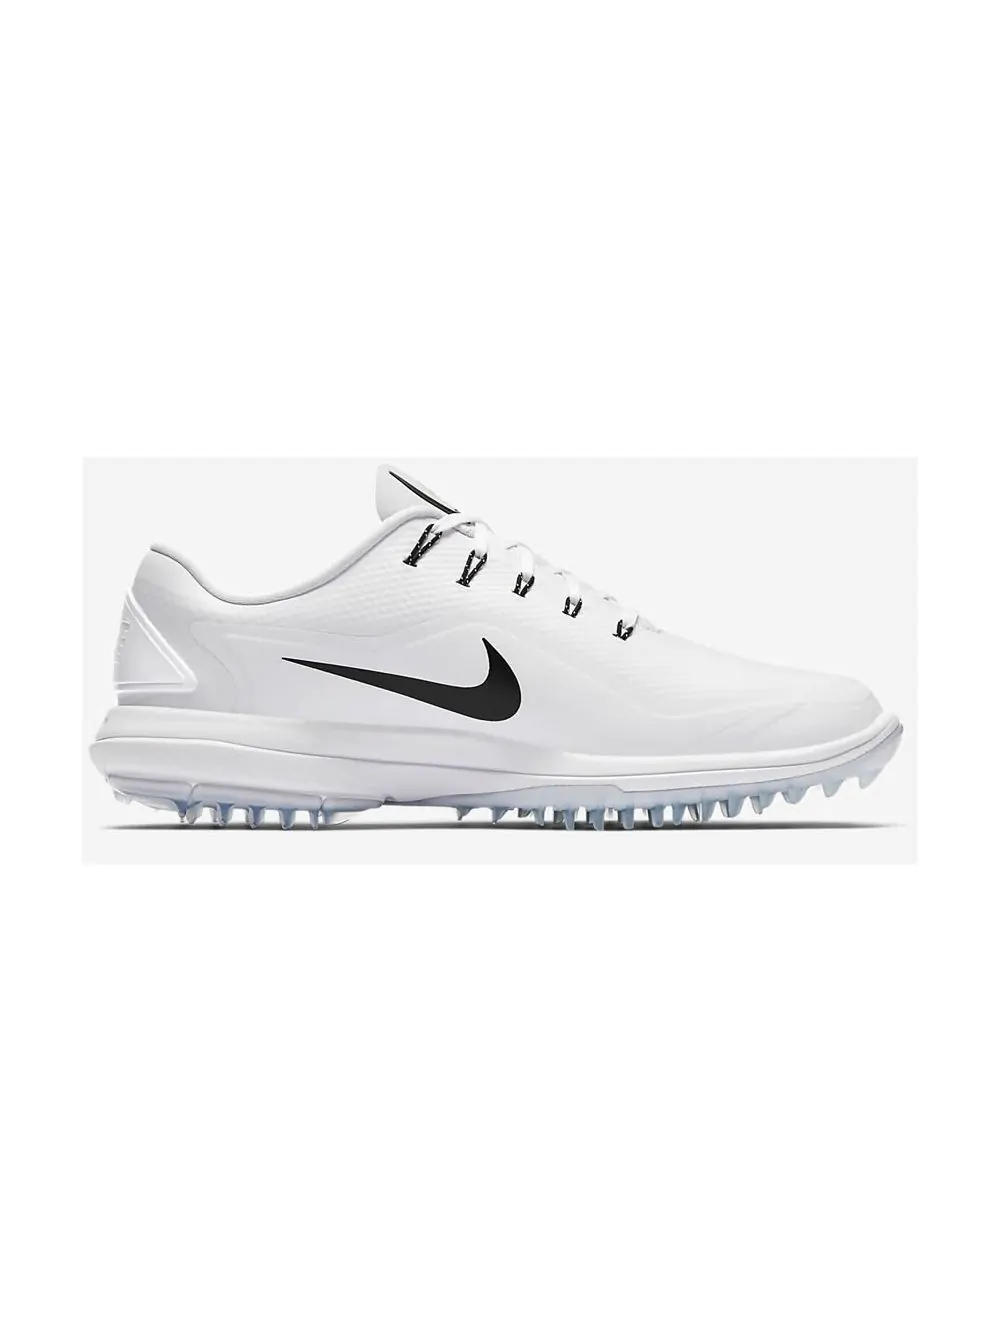 鍔 vergüenza mosaico Nike Lunar Control Vapor 2 Golf Shoes - White/Black-Pure Platinum-Volt |  Aslan Golf